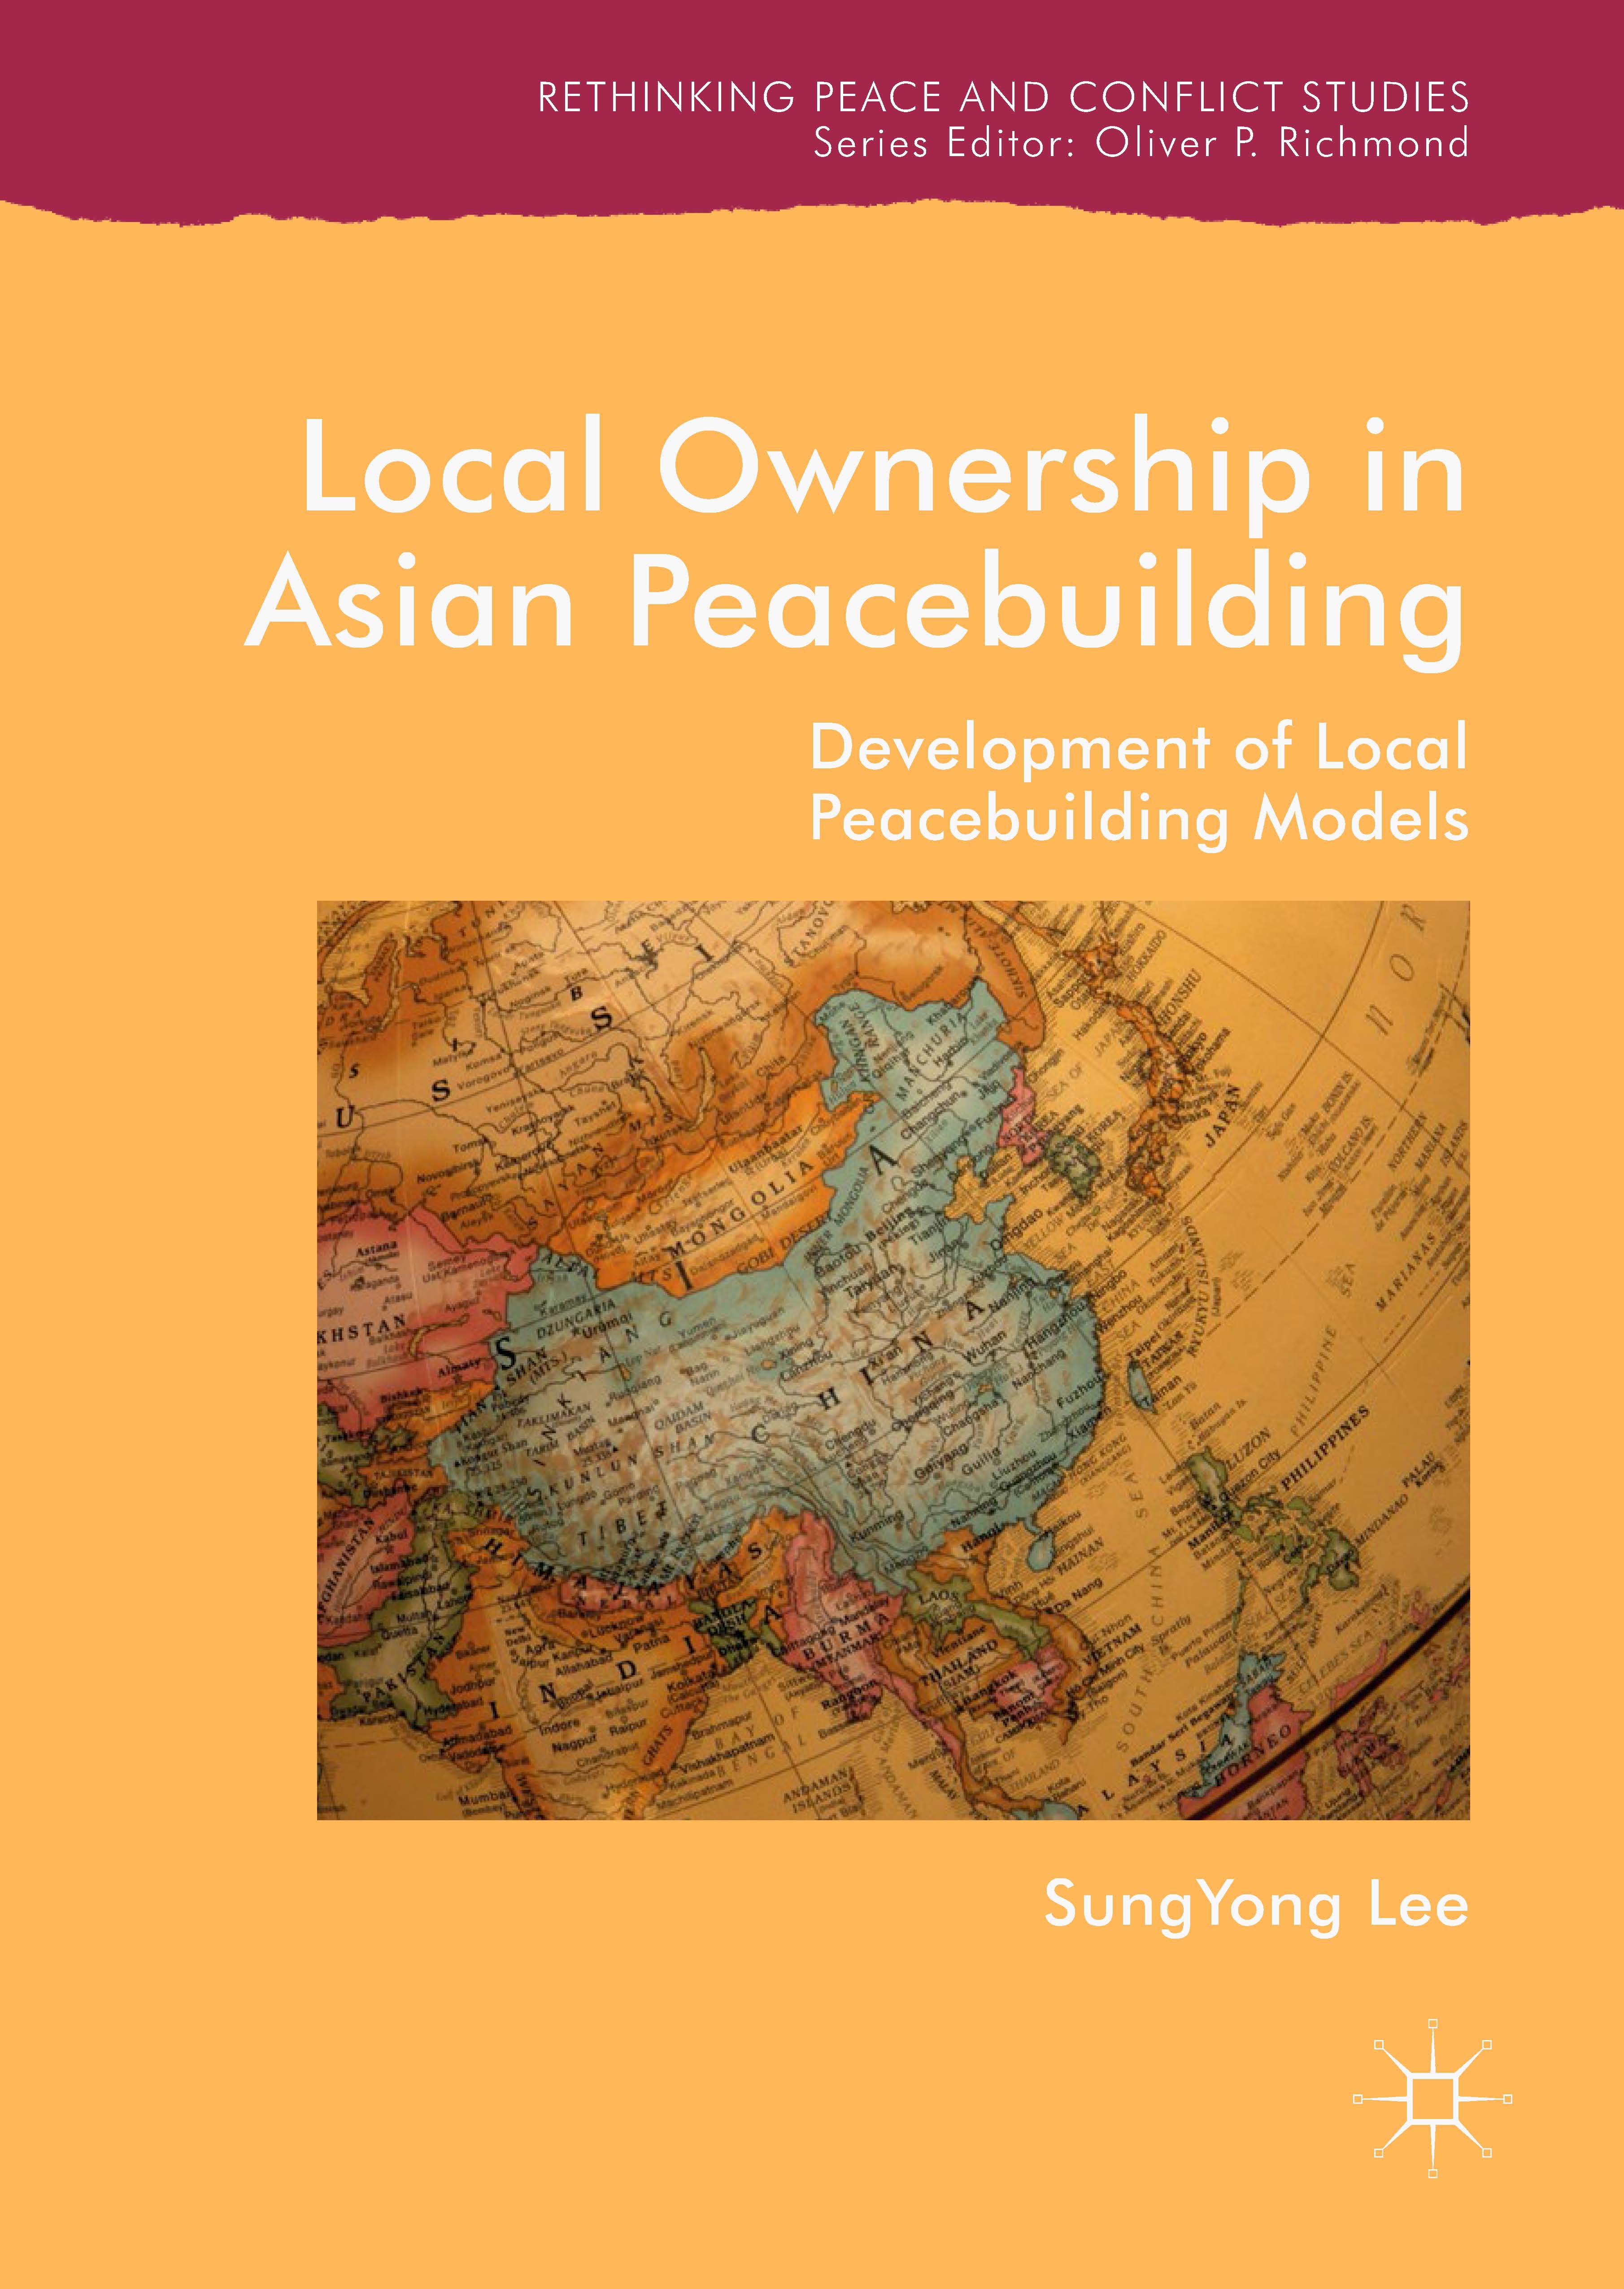 页面提取自－2019_Book_Local Ownership in Asian Peacebuilding.jpg